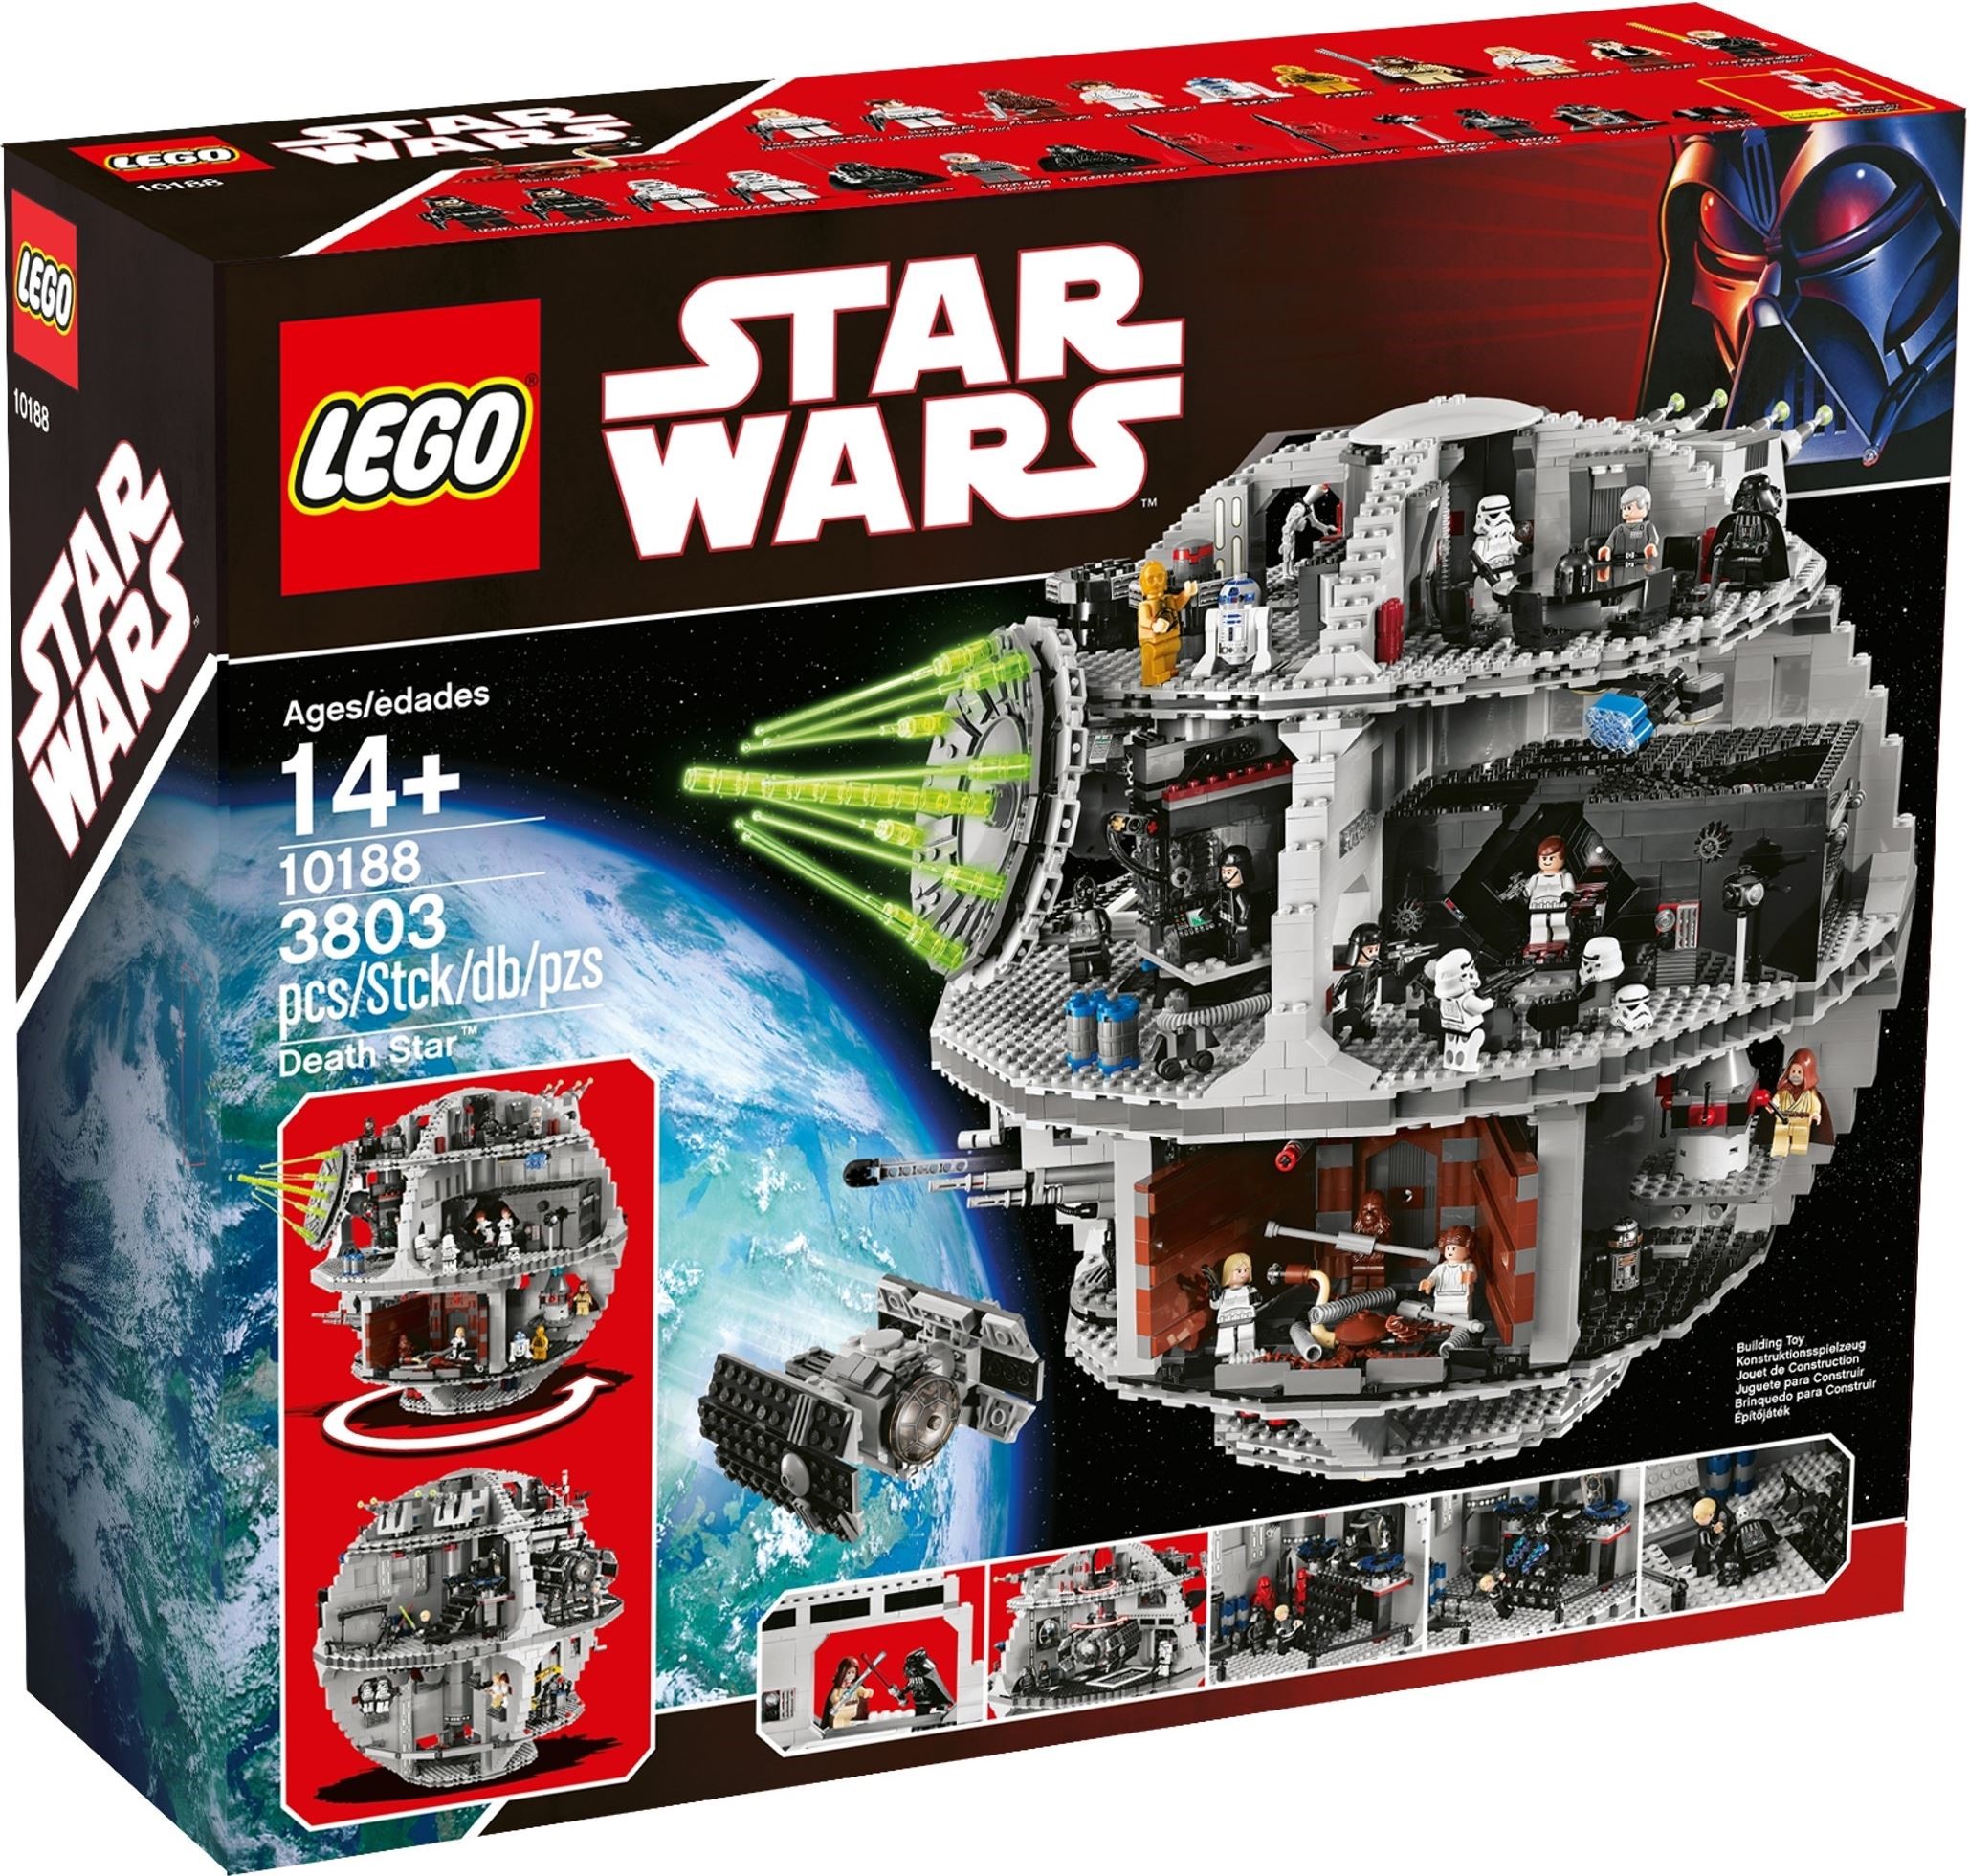 NEW 100% LEGO Chewbacca From Set 10188 Star Wars Sw0011a 